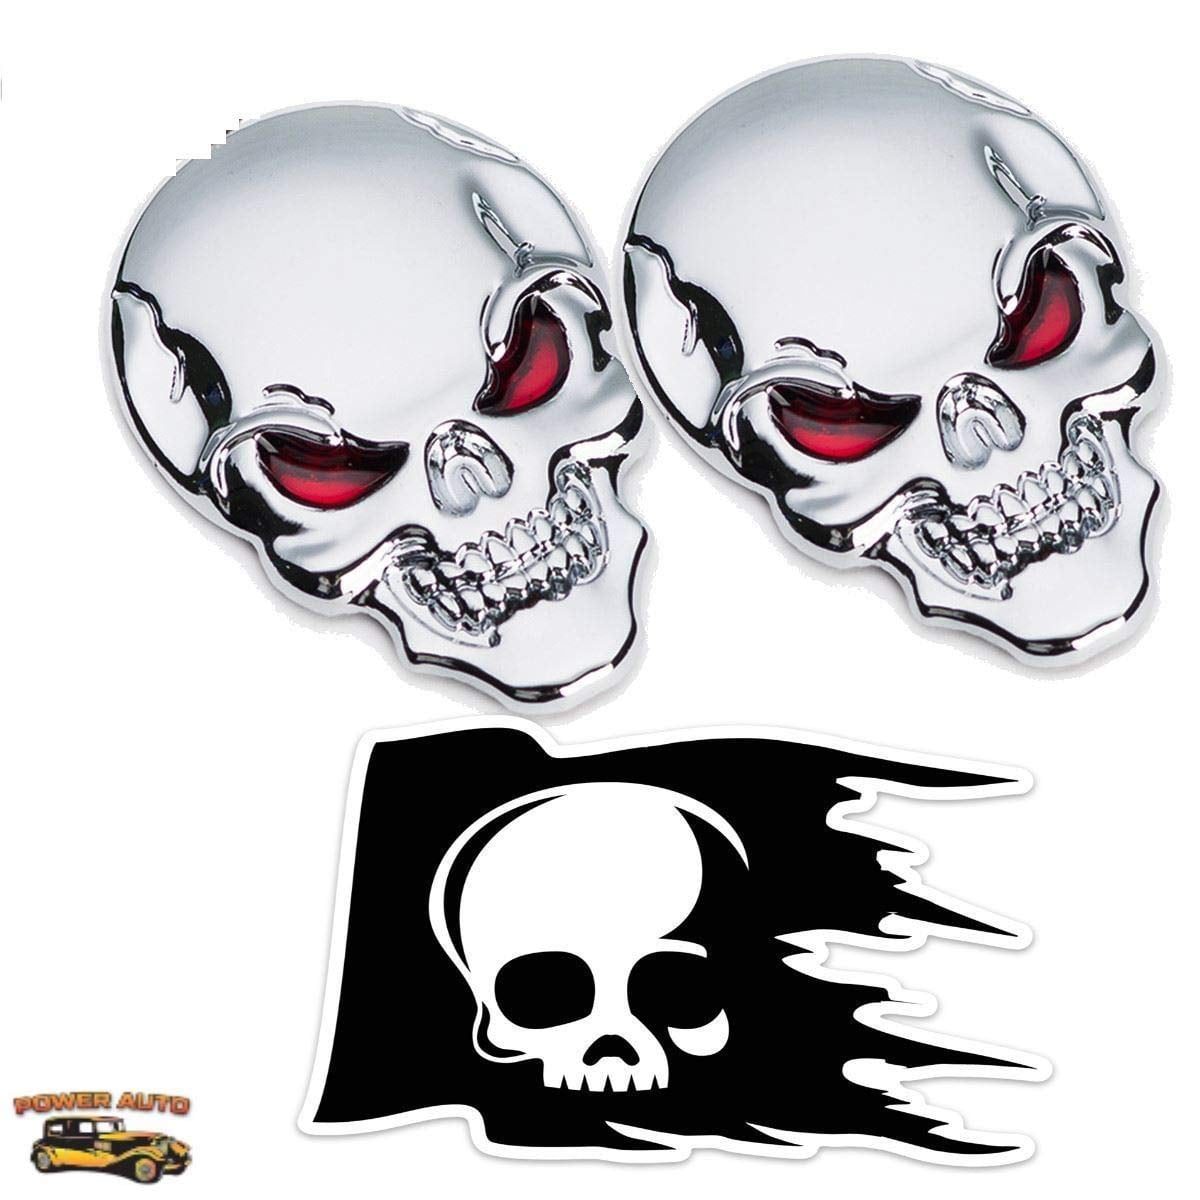 Details about   3d Car Sticker Car Sticker Scull & Bones Silver From Metal Versatile show original title 